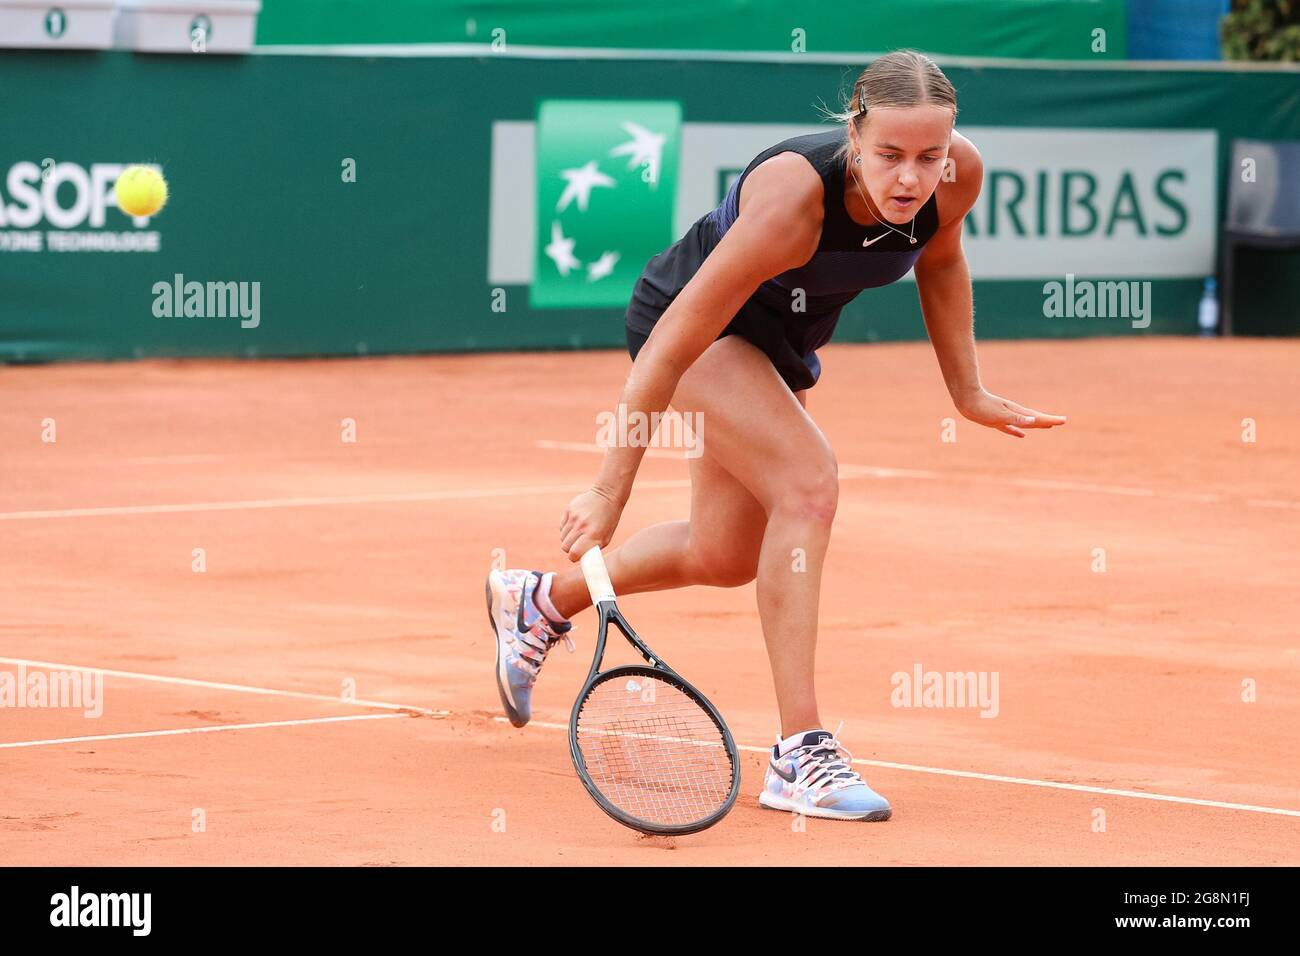 Anna Karolina Schmiedlova (SLOVAKIA) plays against Anna Bondar (HUNGARY) seen in action during the BNP Paribas Poland Open Tournament (WTA 250 category) in Gdynia